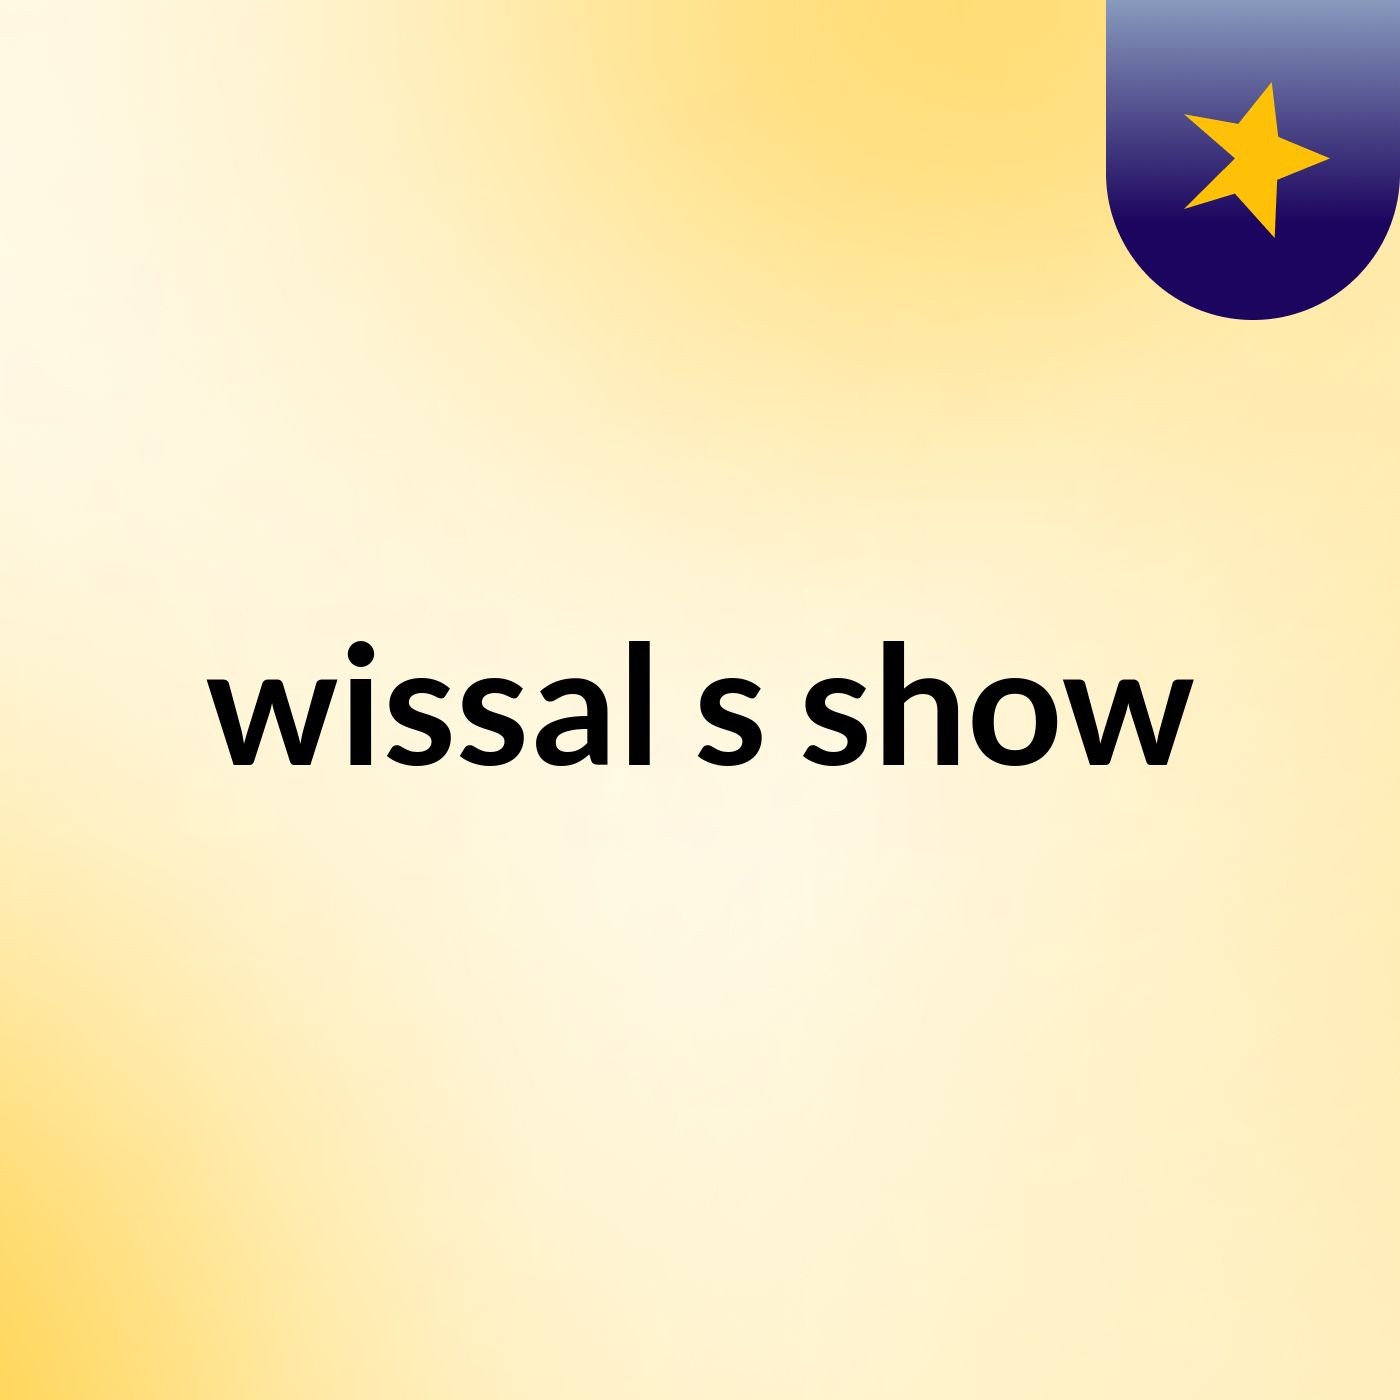 wissal's show